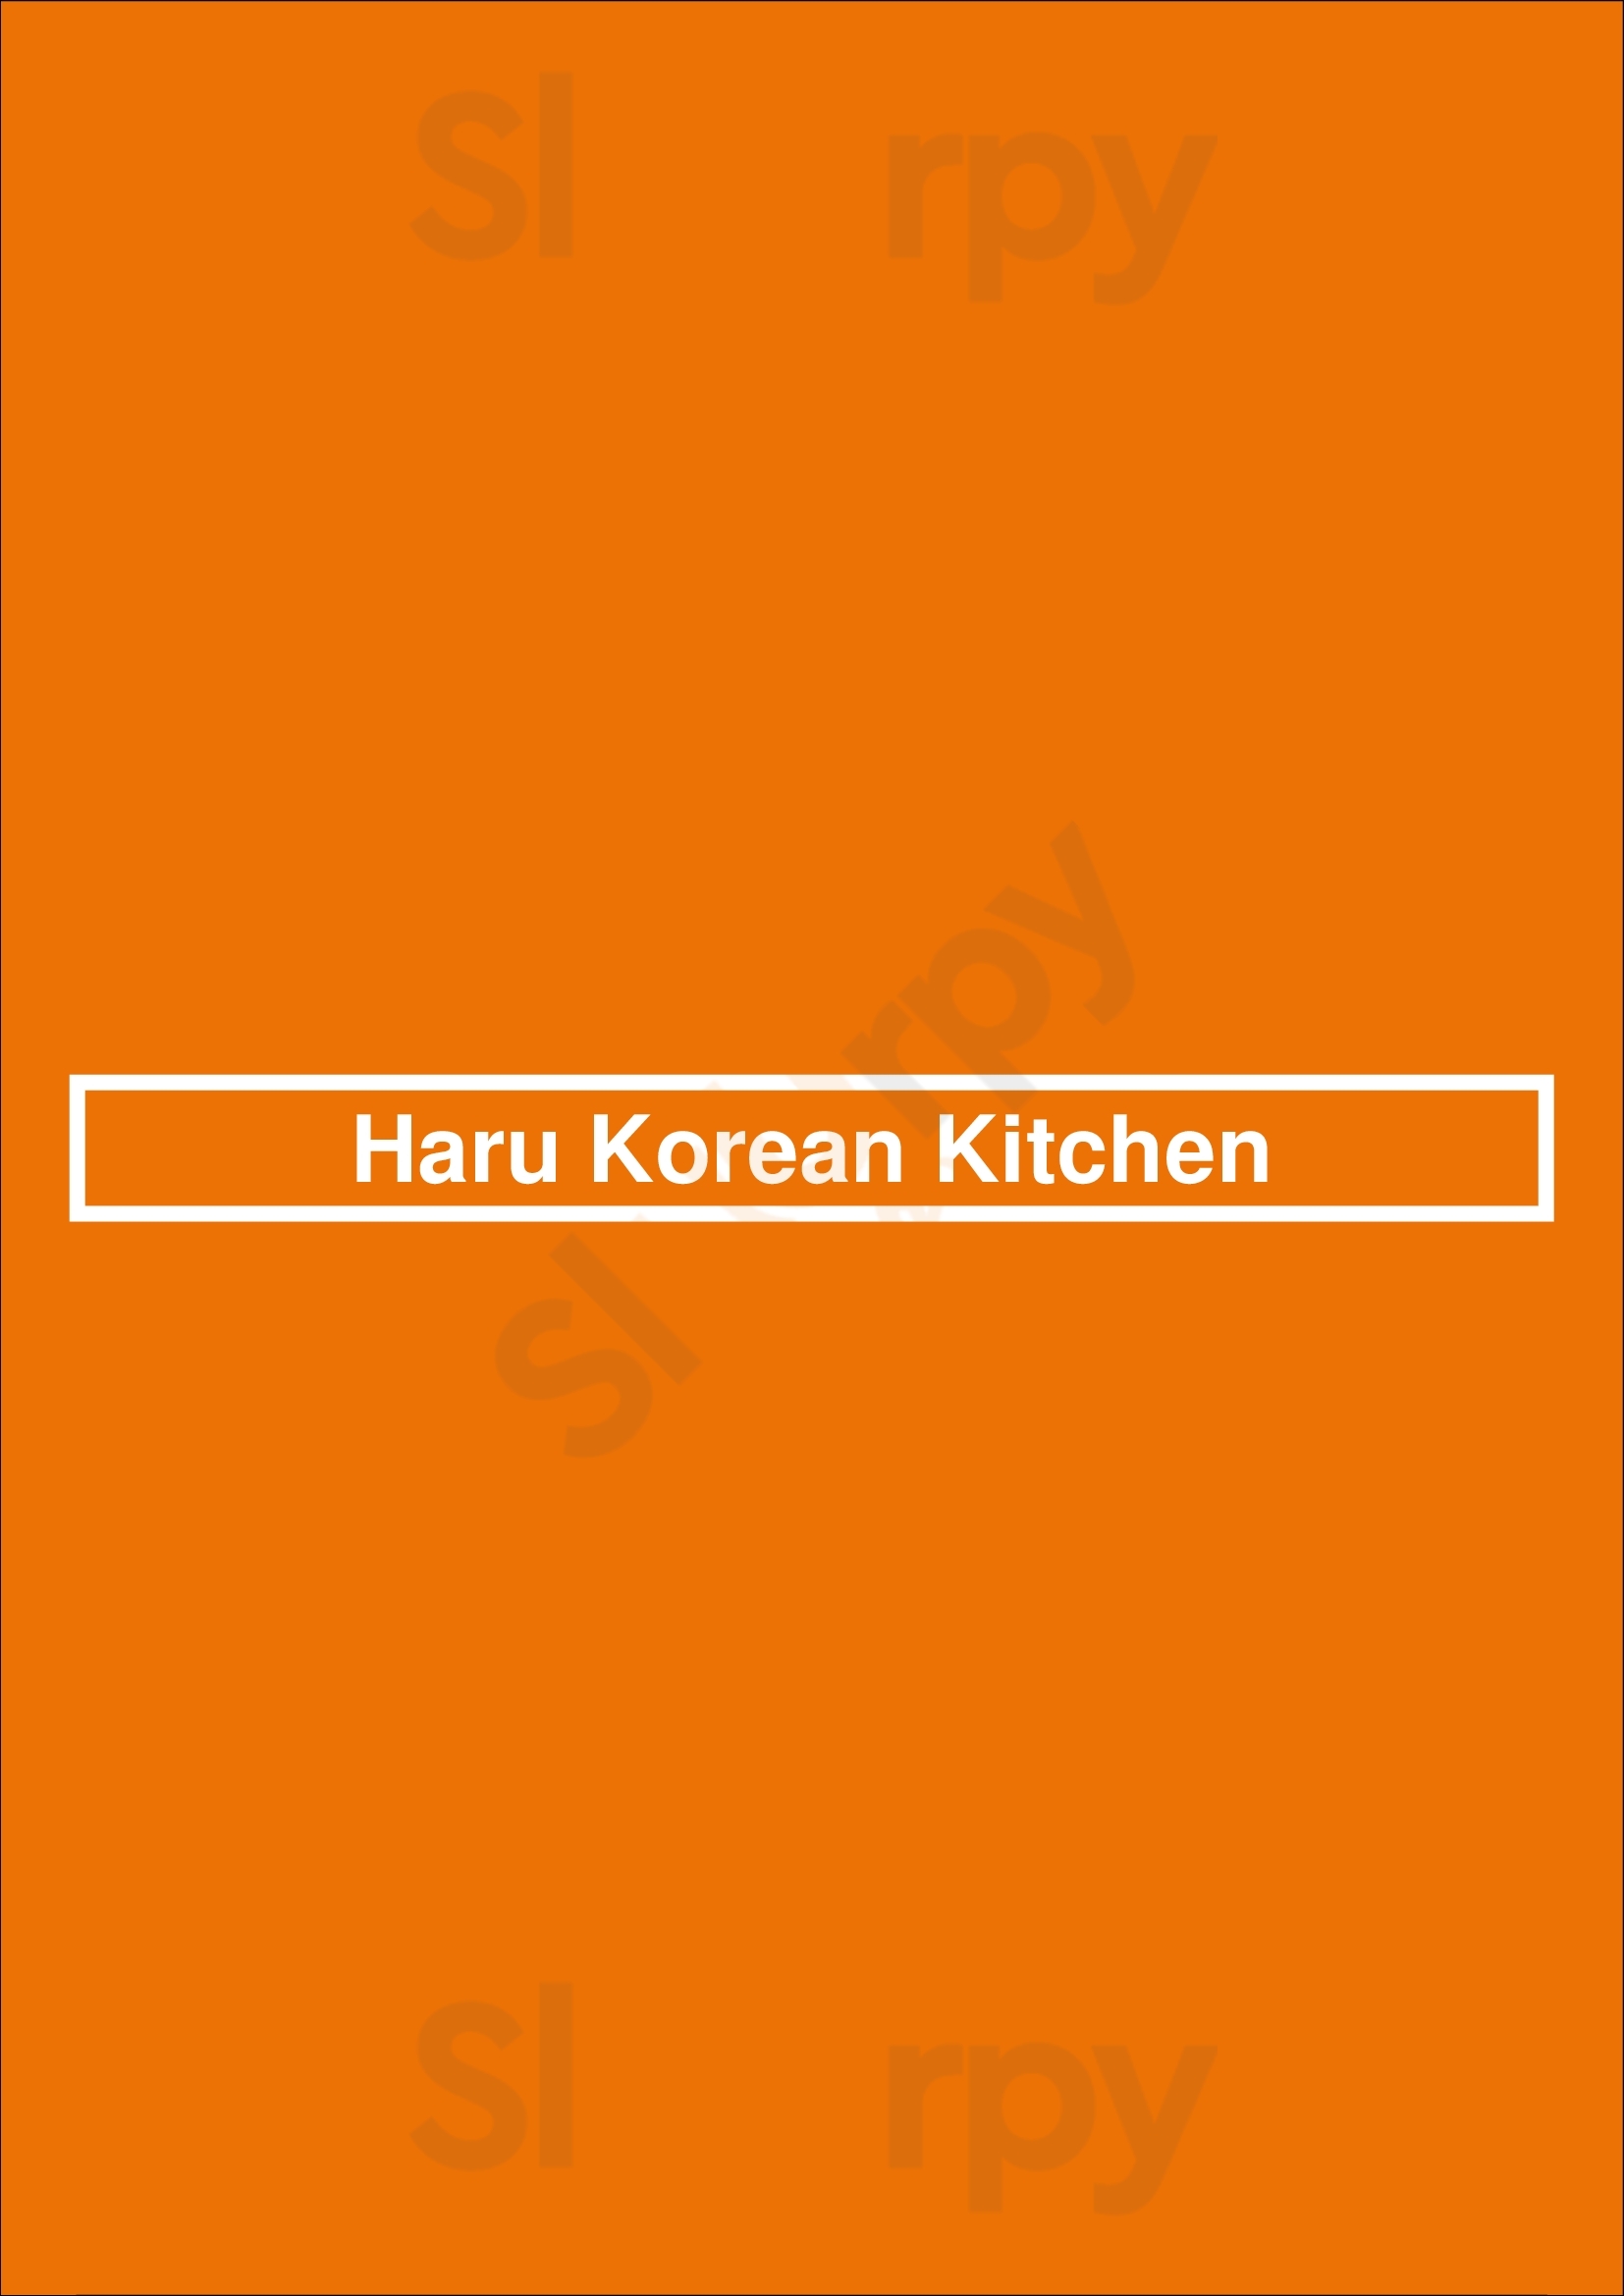 Haru Korean Kitchen Vancouver Menu - 1